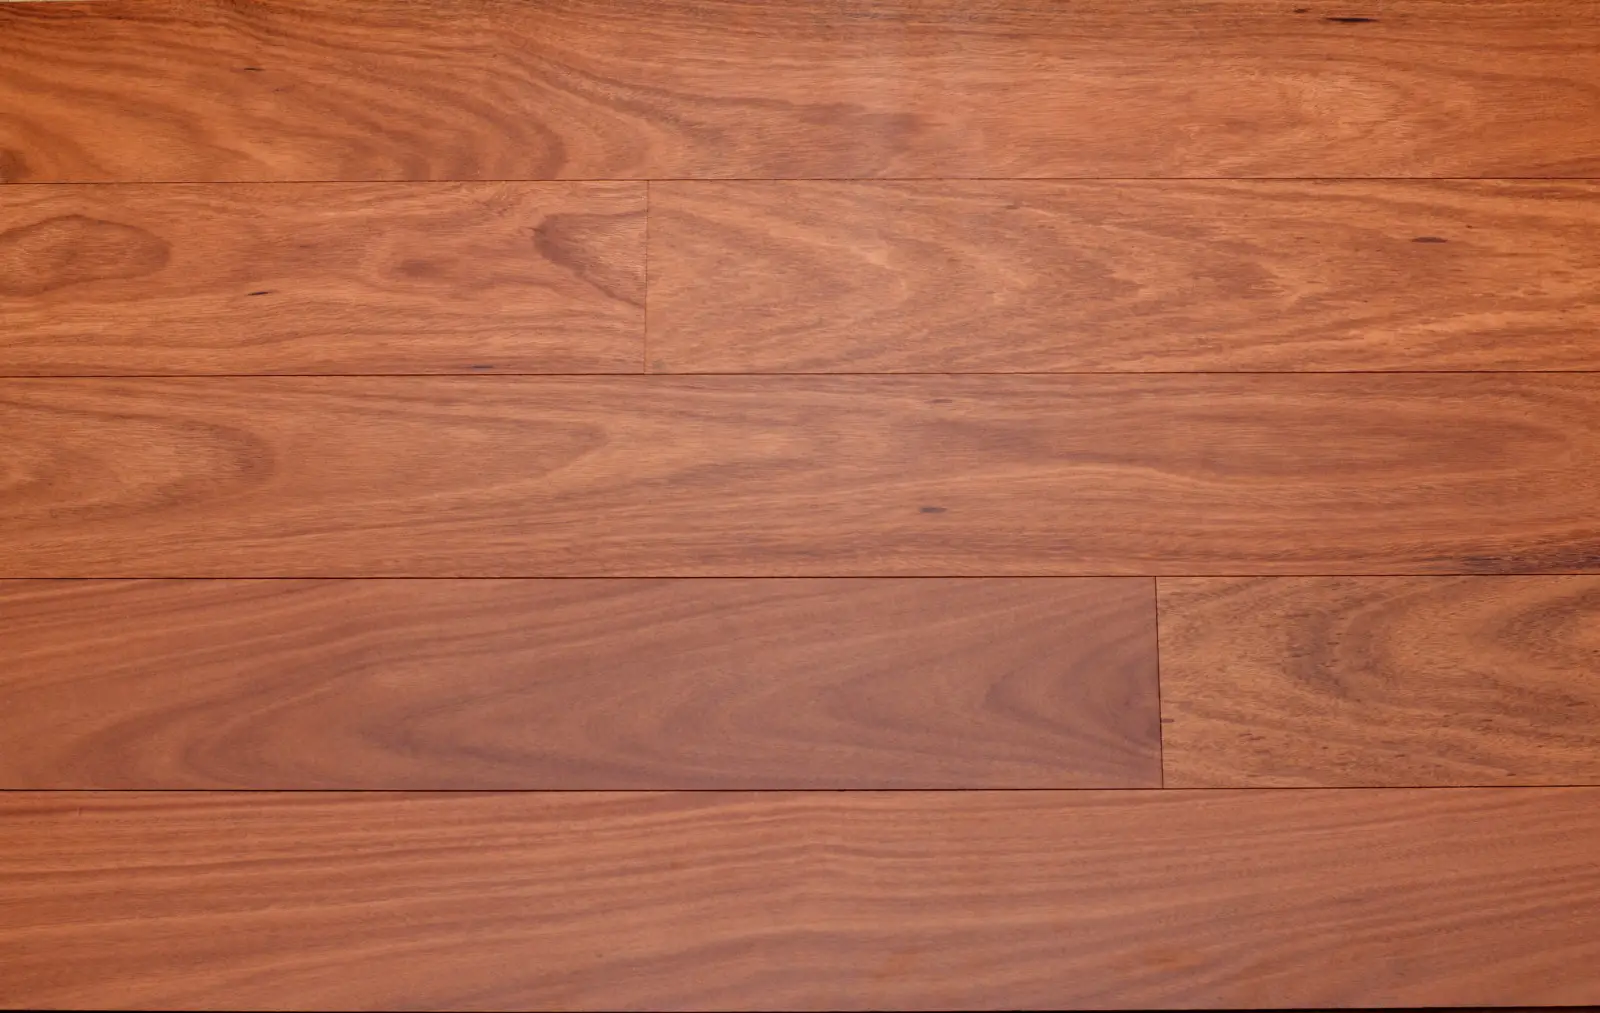 What Are Mahogany Hardwood Floors